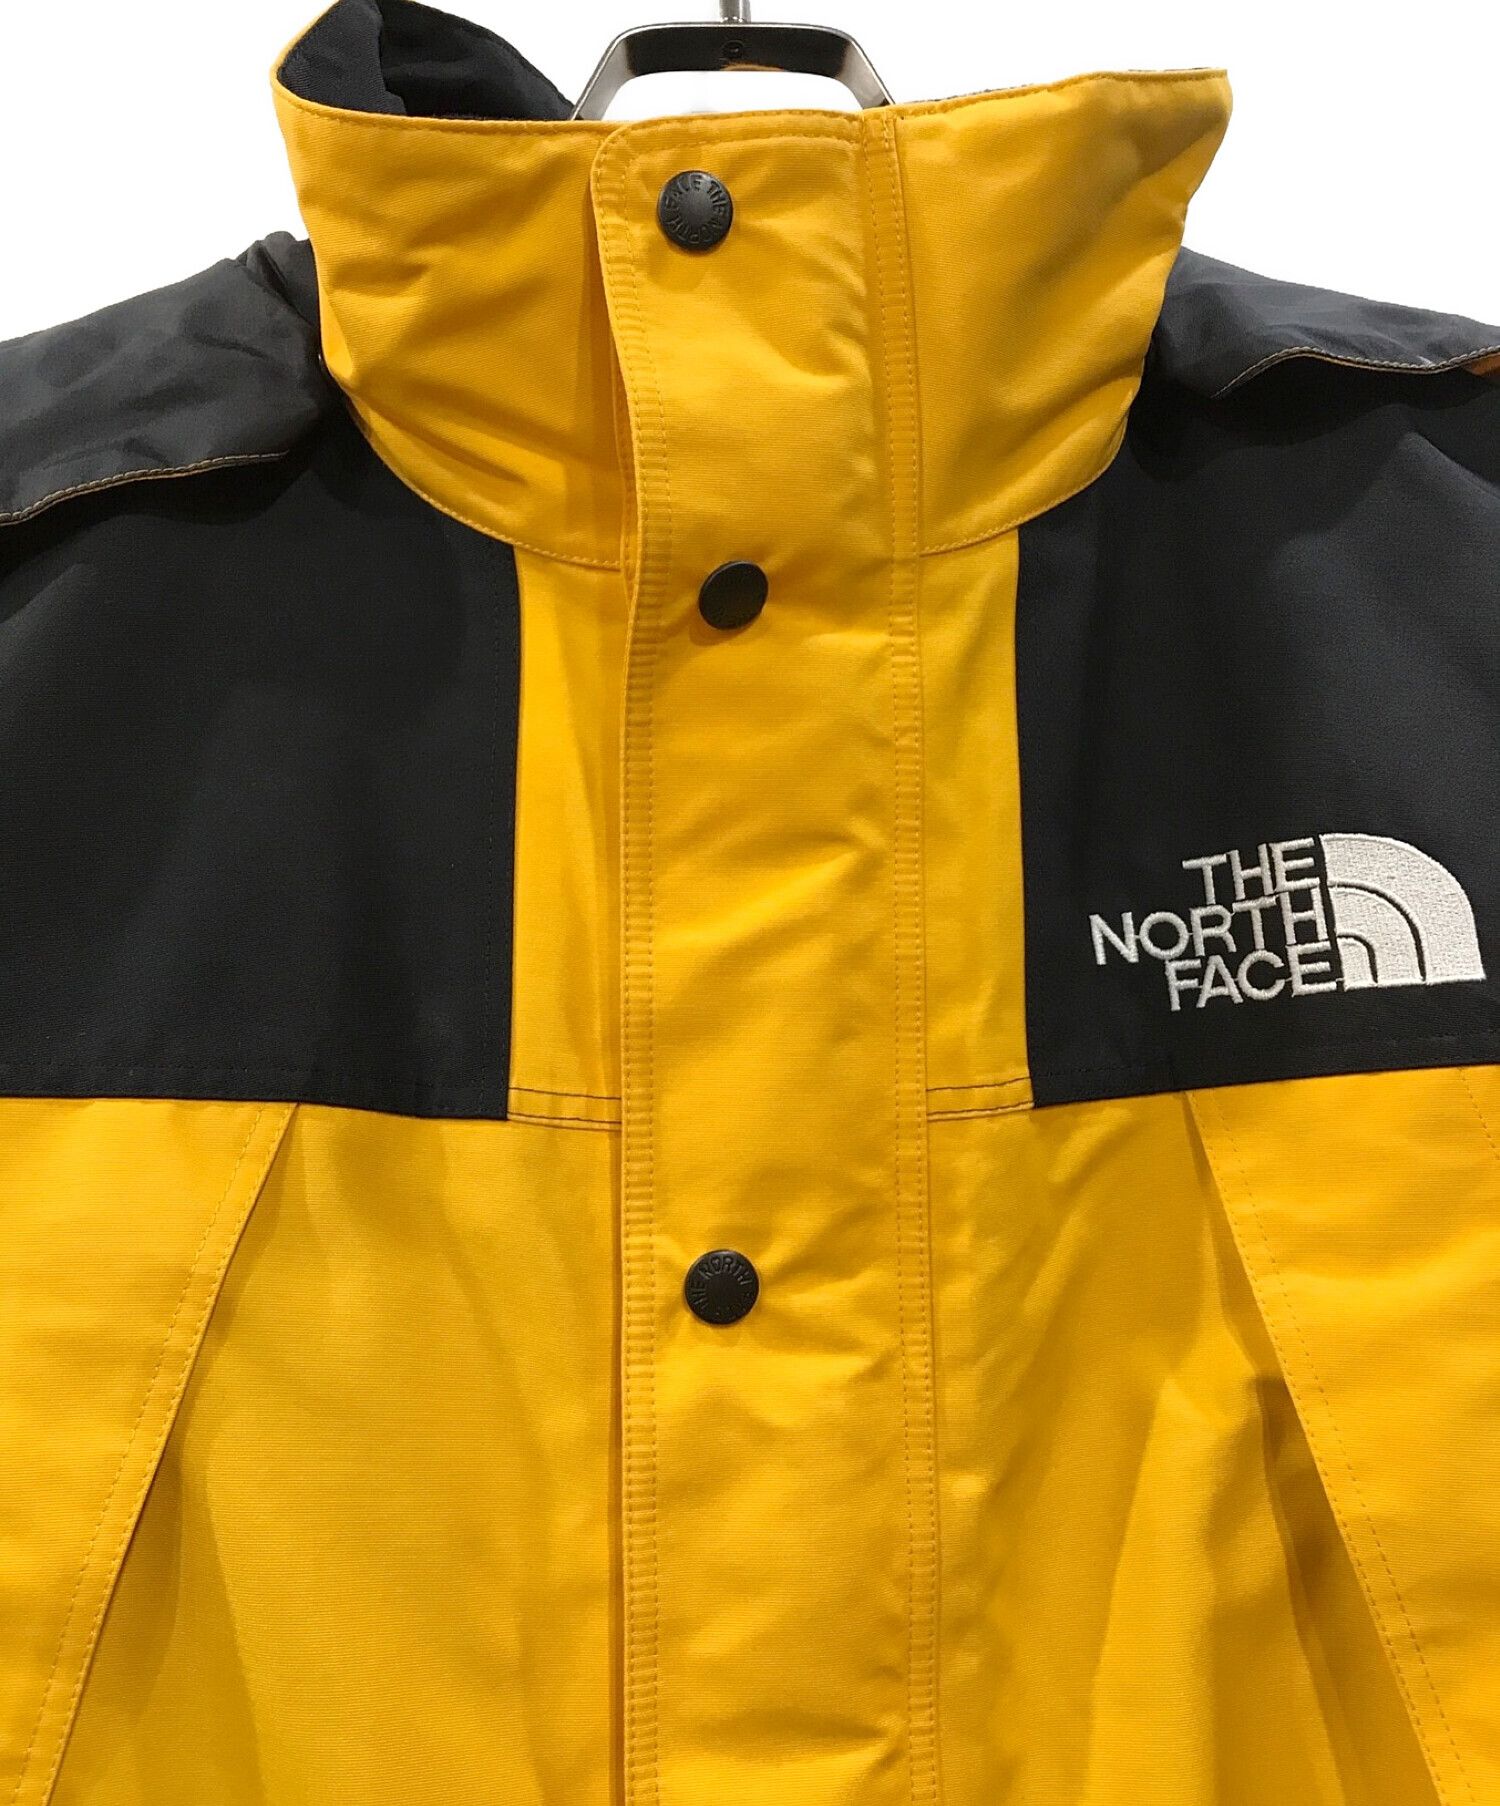 THE NORTH FACE (ザ ノース フェイス) Mountain Guide Jacket マウンテンガイドジャケット イエロー サイズ:L